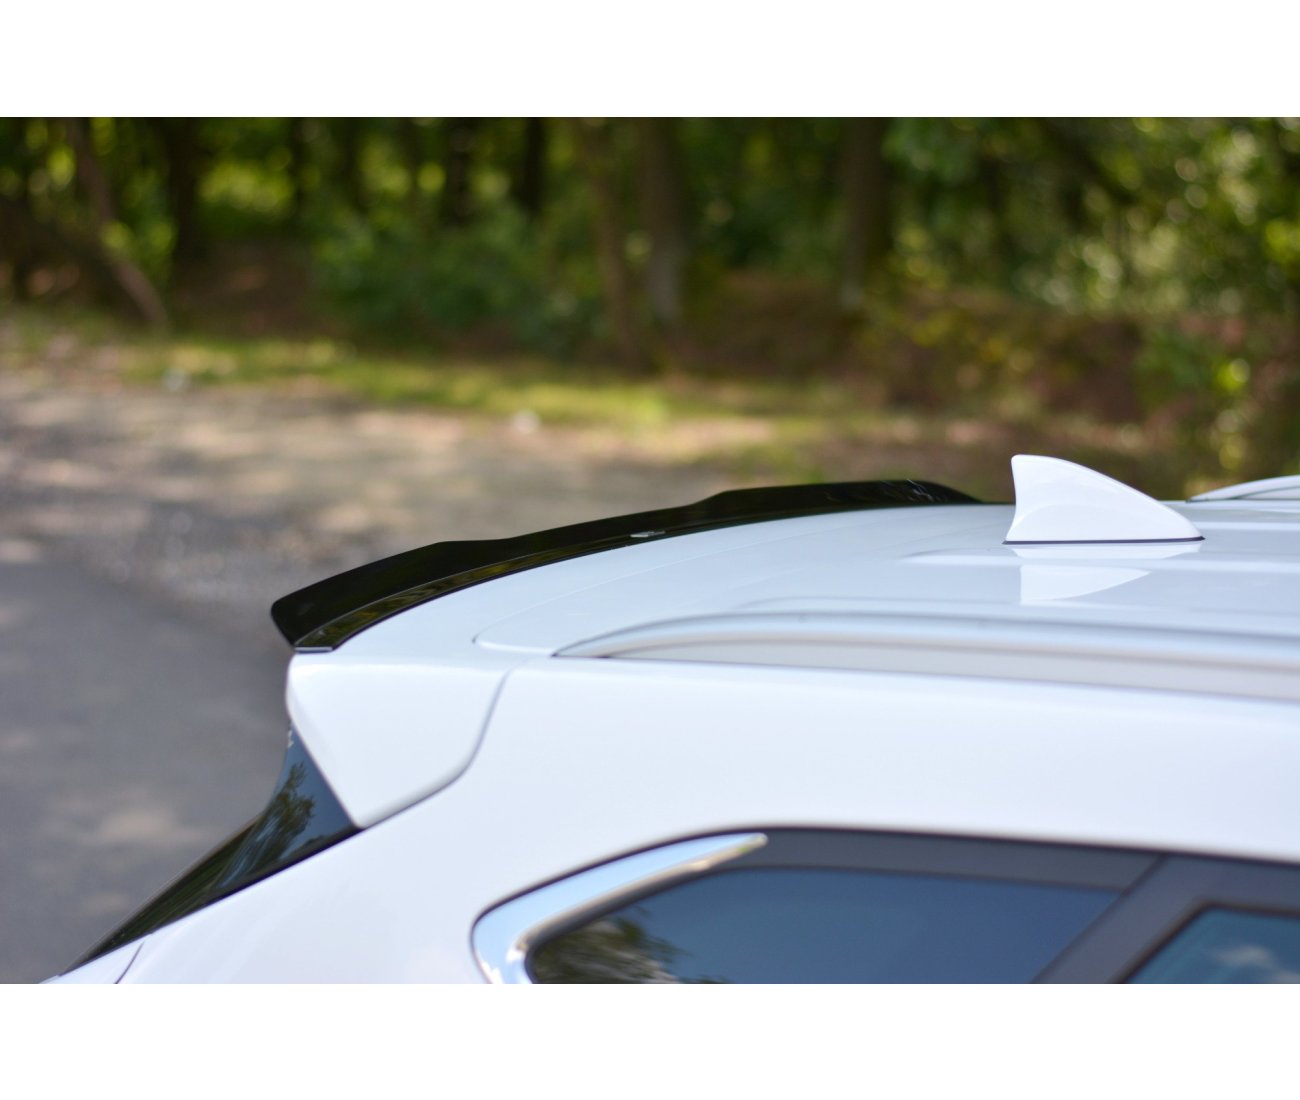 Rear spoiler attachment tear-off edge for Hyundai Tucson Facelift